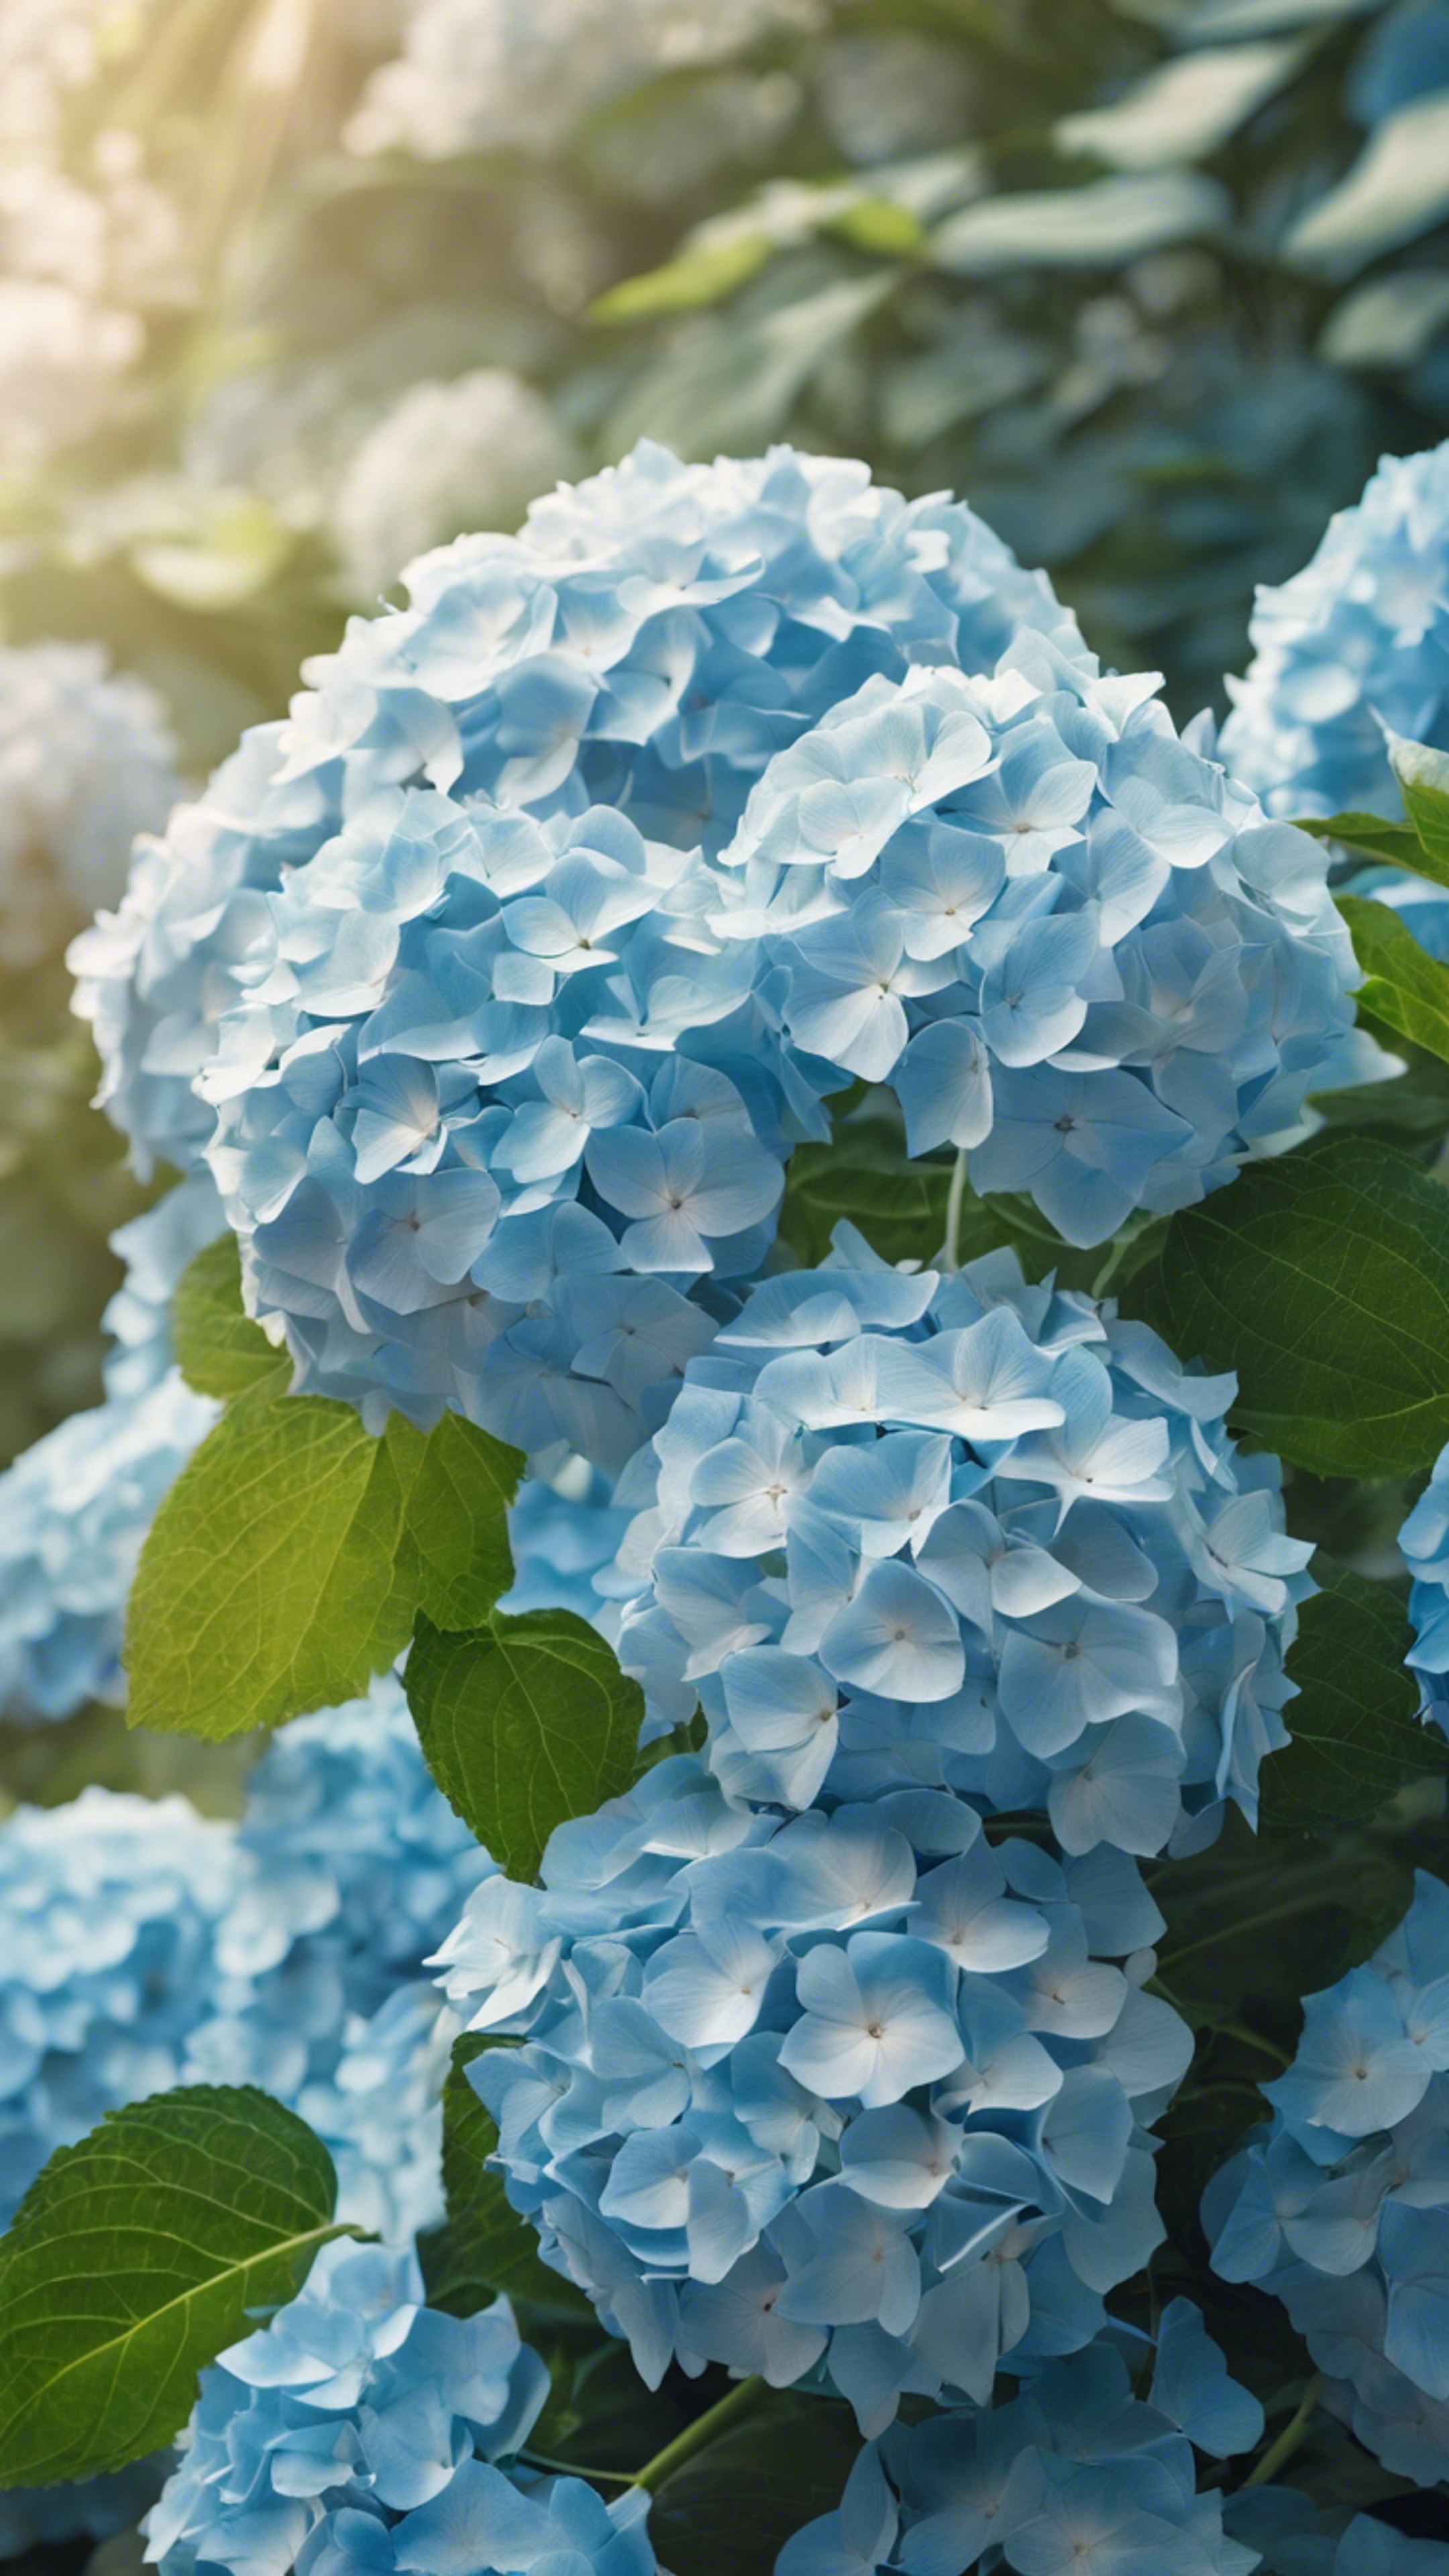 A cluster of pastel blue hydrangeas swaying gently in a sunny garden. Wallpaper[9c6026d81c604b58b63f]